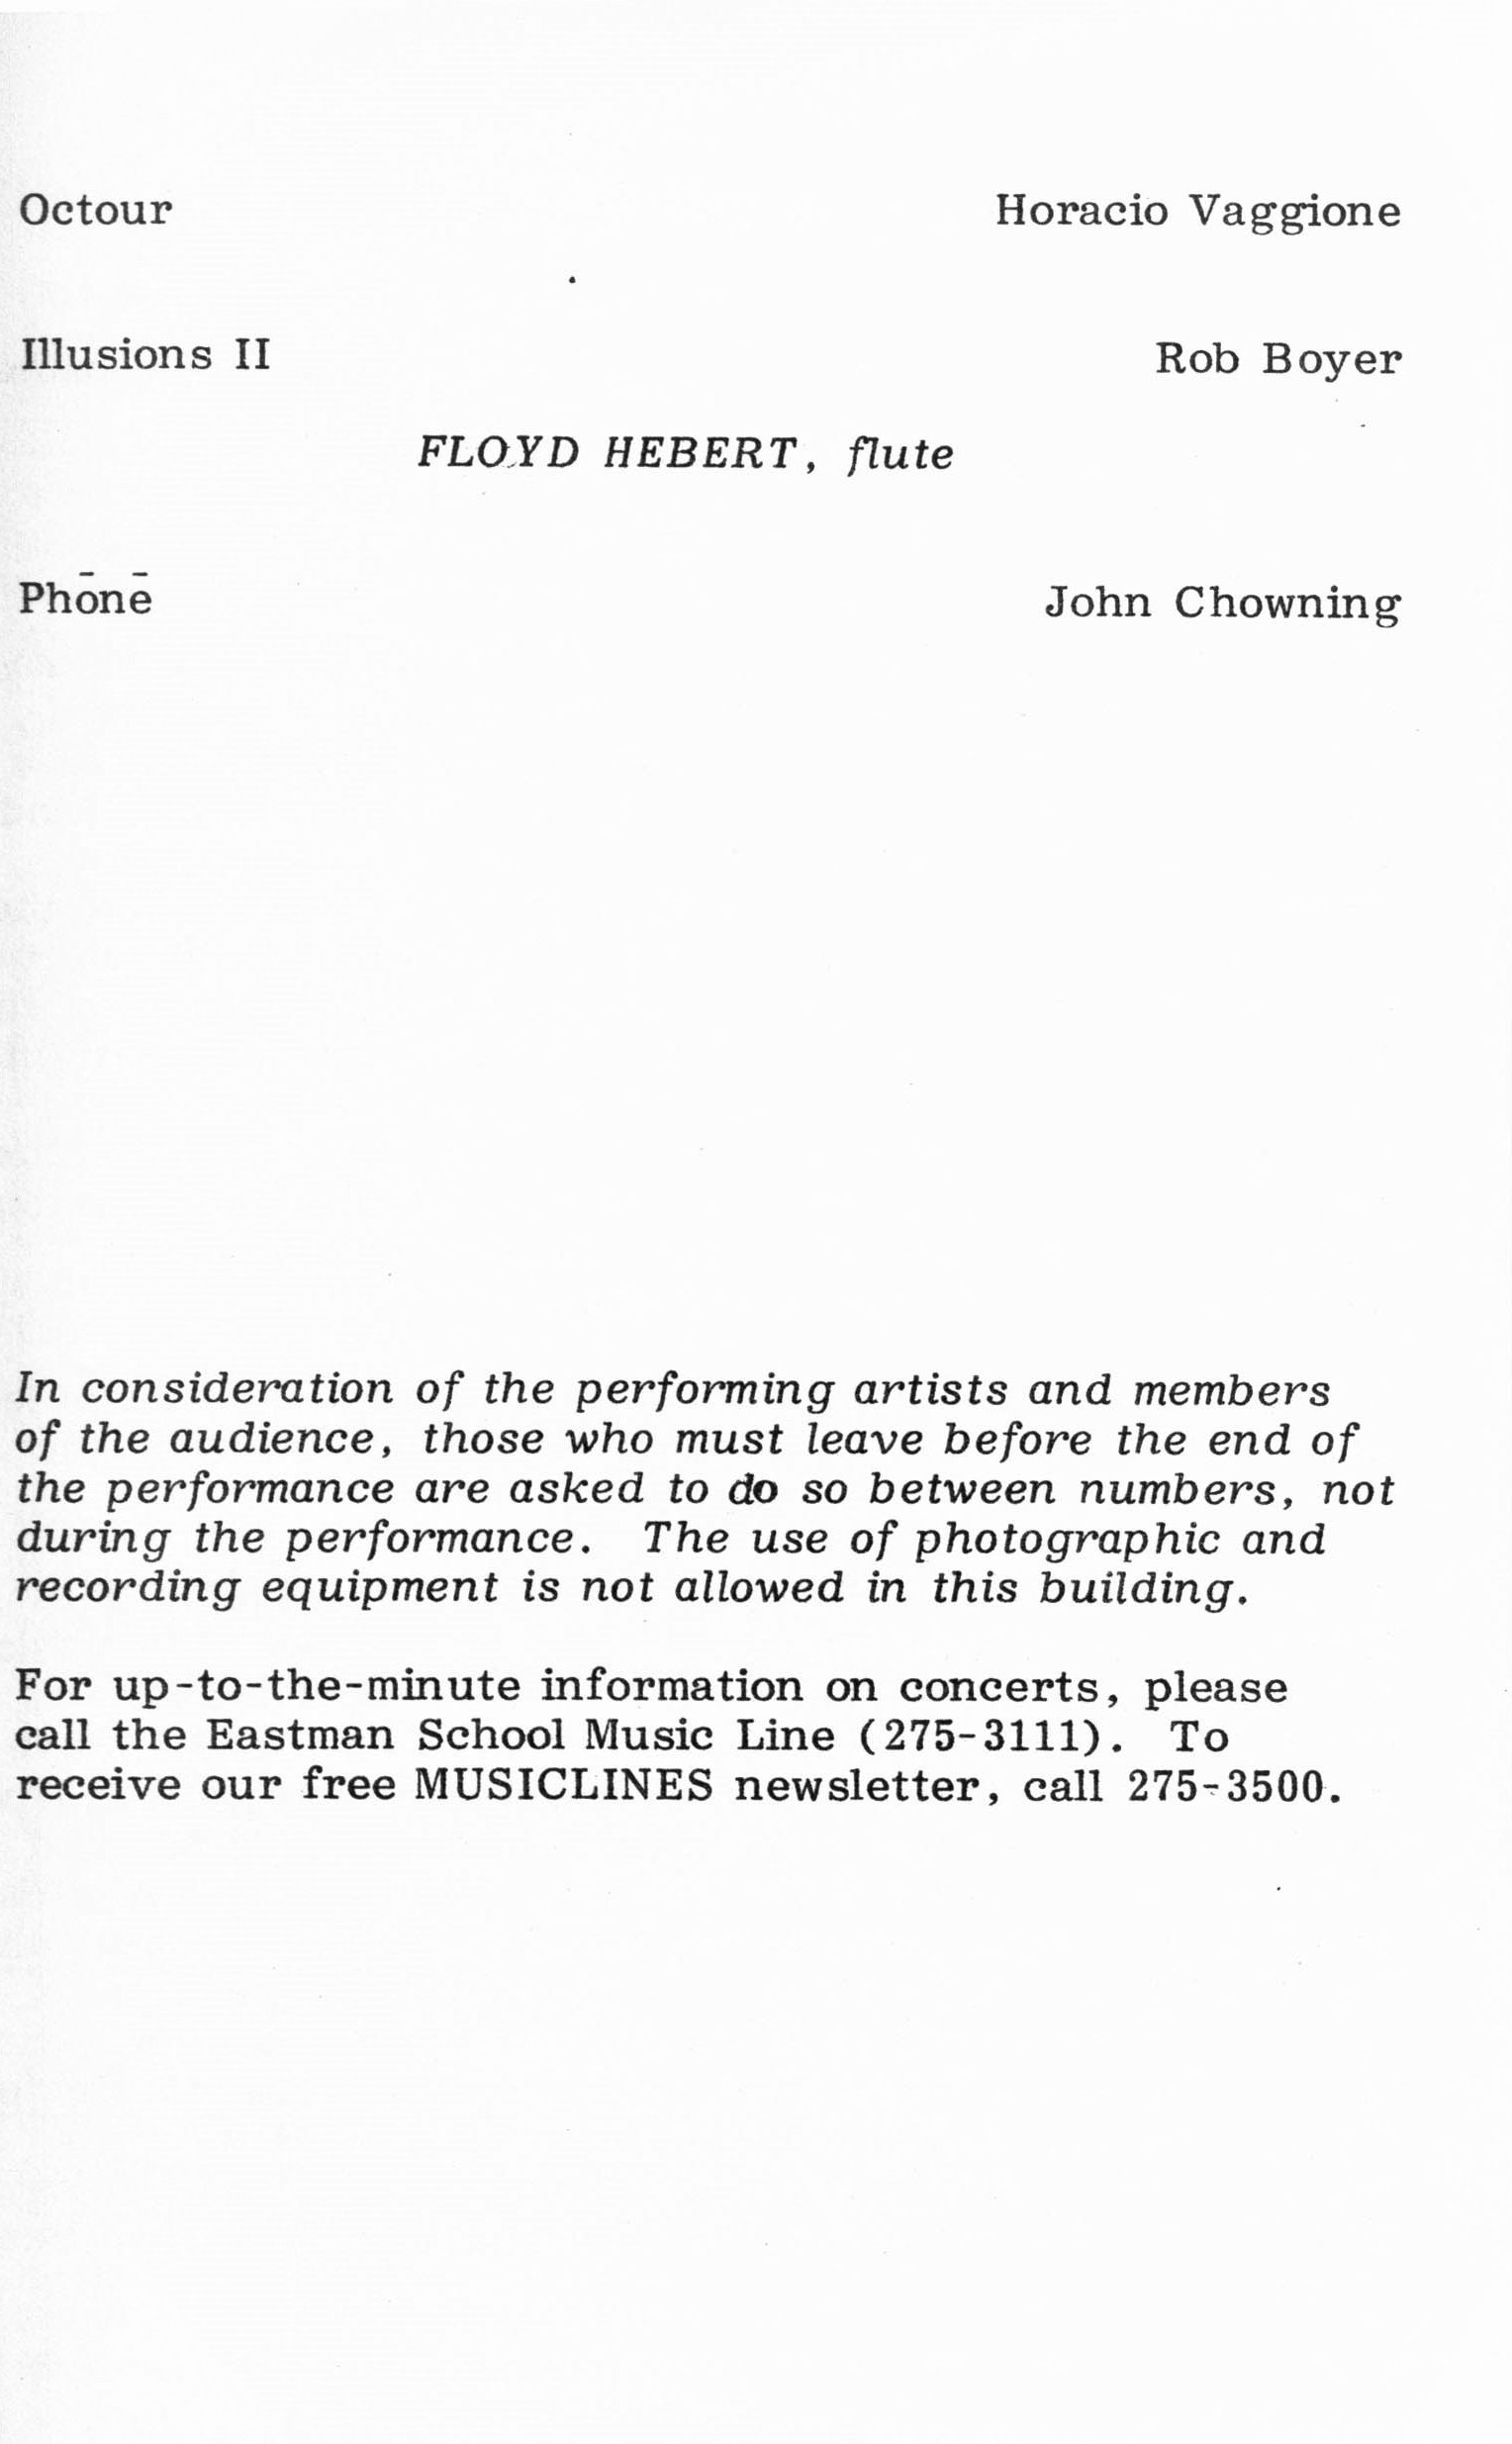 1983 ICMC Concert IV program, page 03